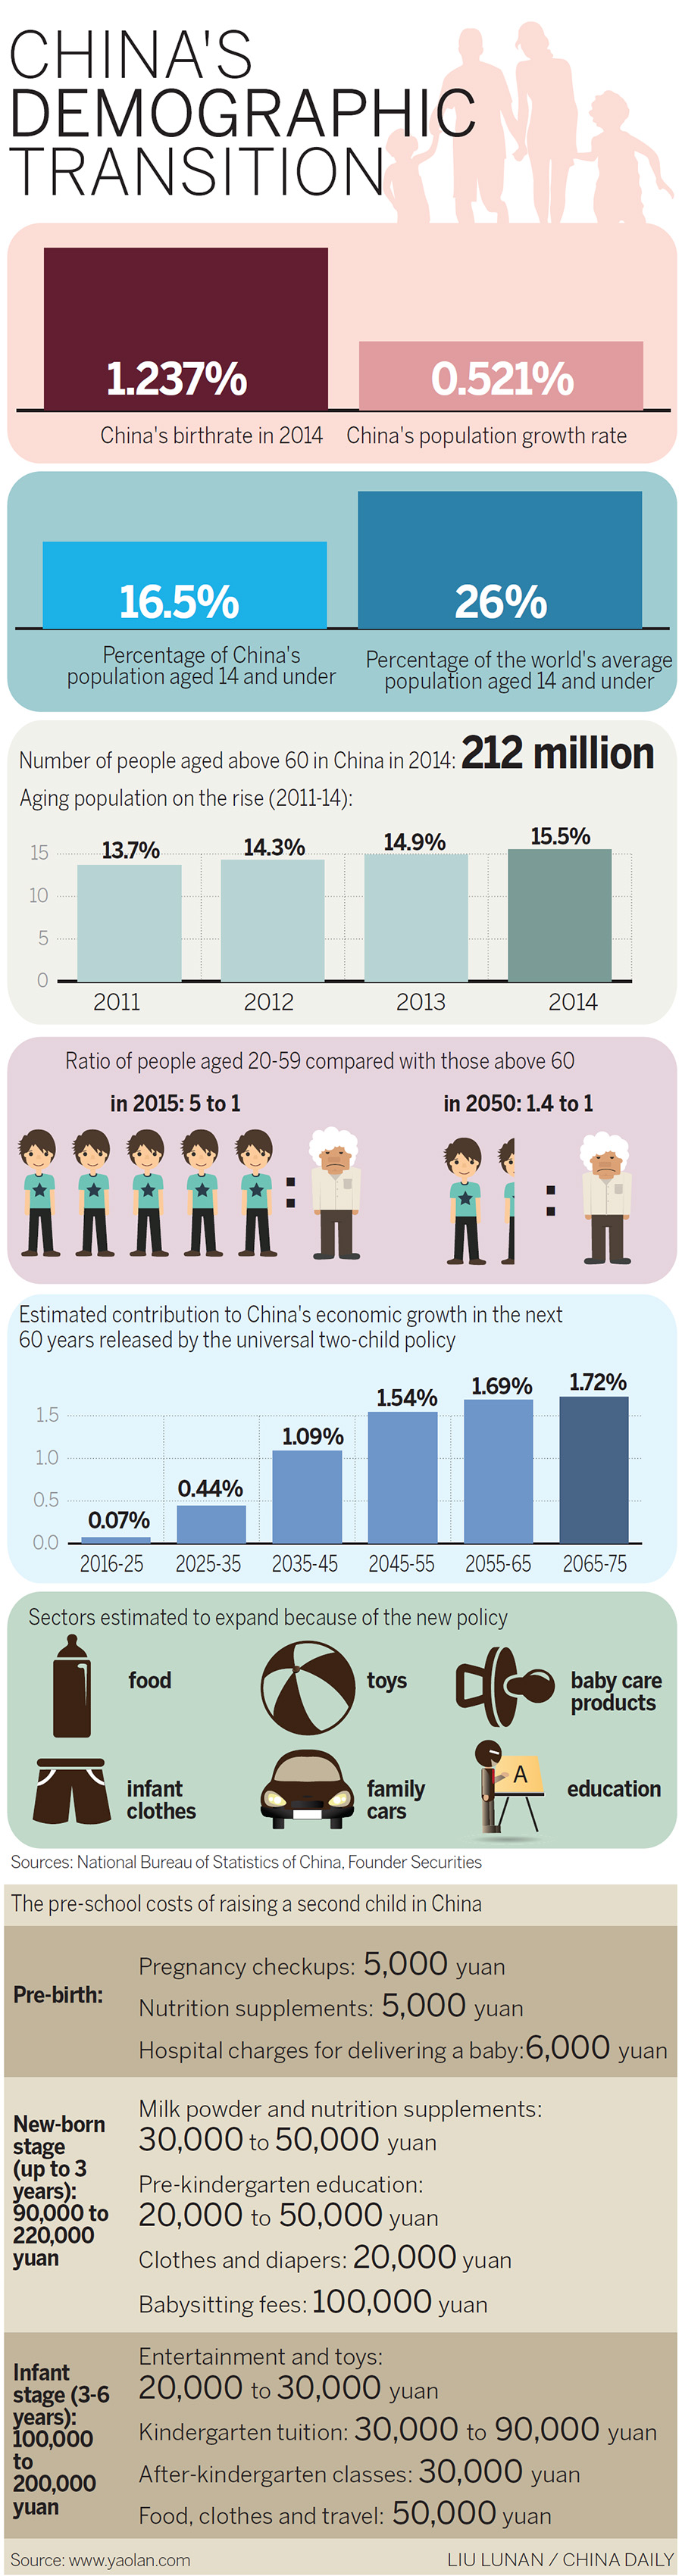 China's demographic transition